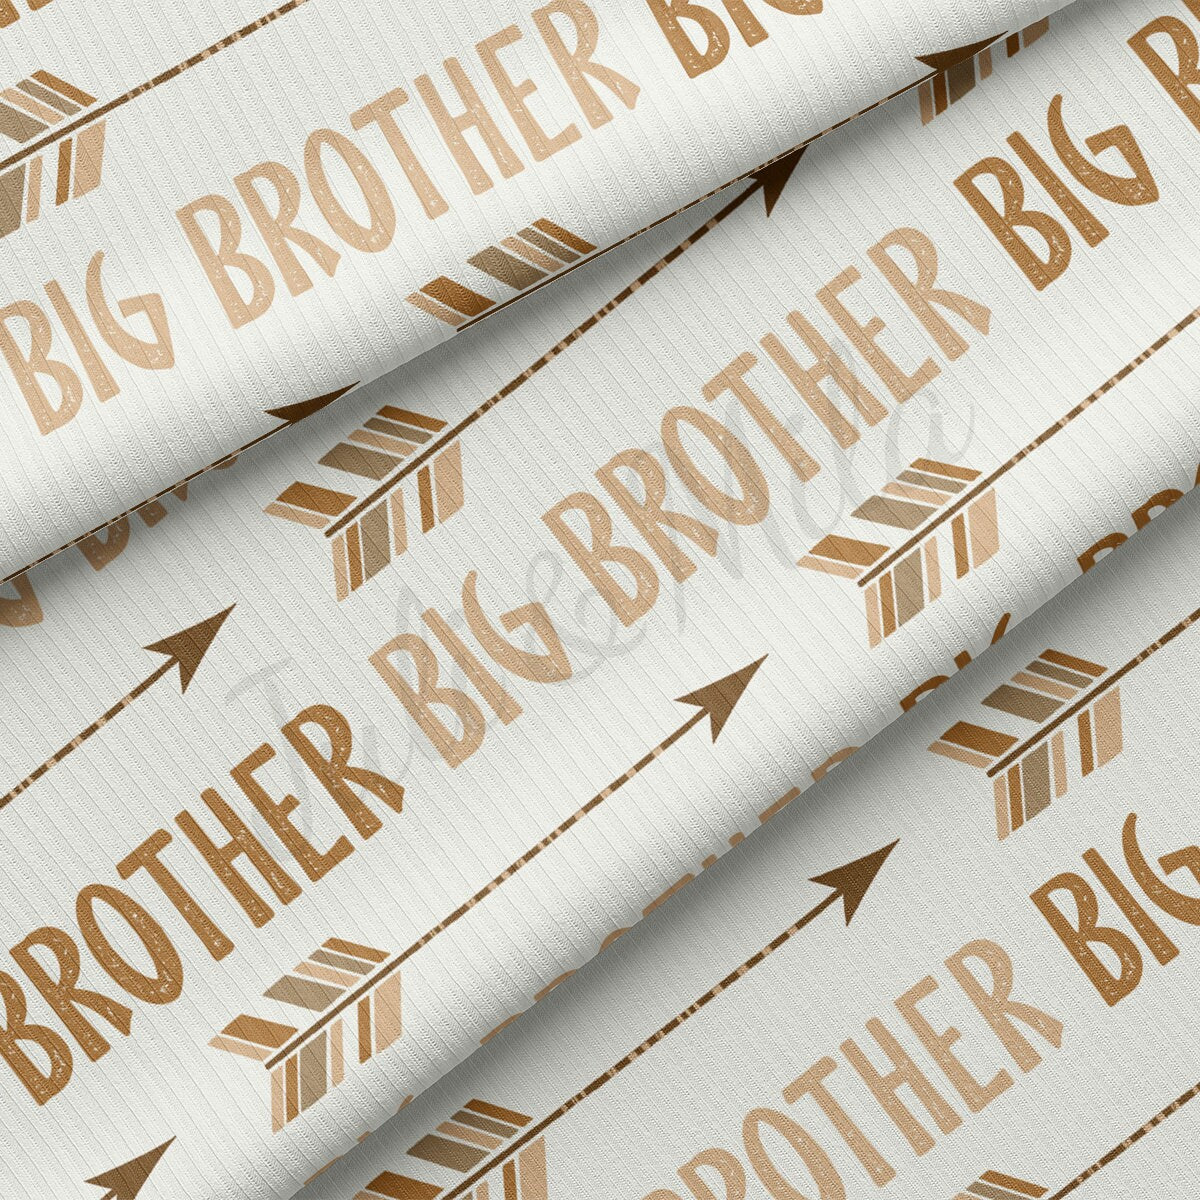 Rib Knit Fabric RBK2321 Big Brother